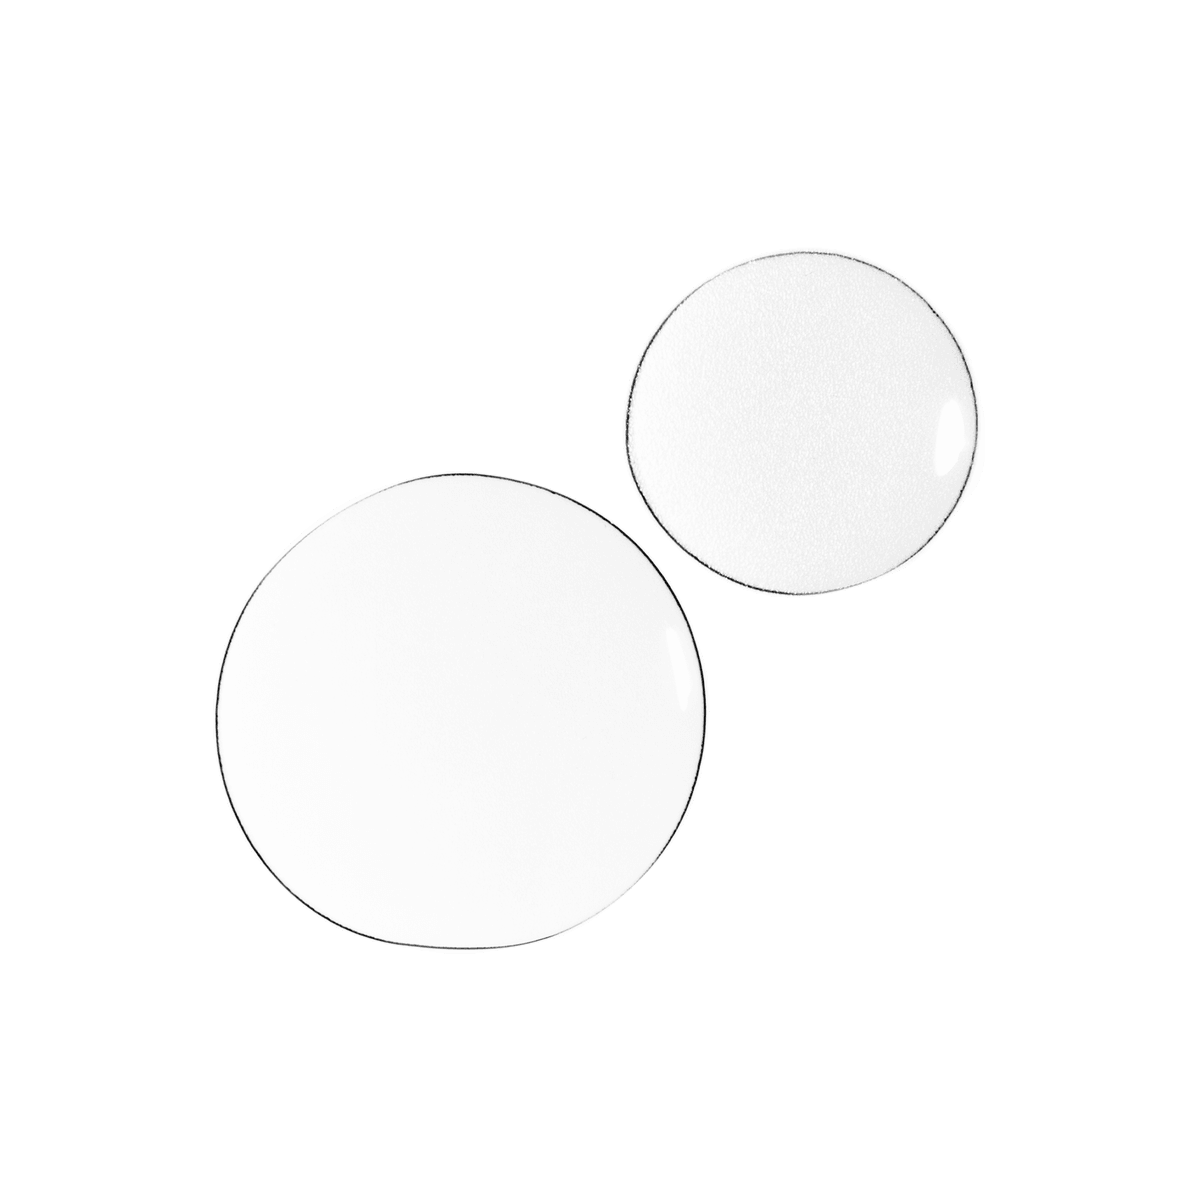 Ordinary Salicylic Acid 2% Anhydrous Solution 30ml - Kenya